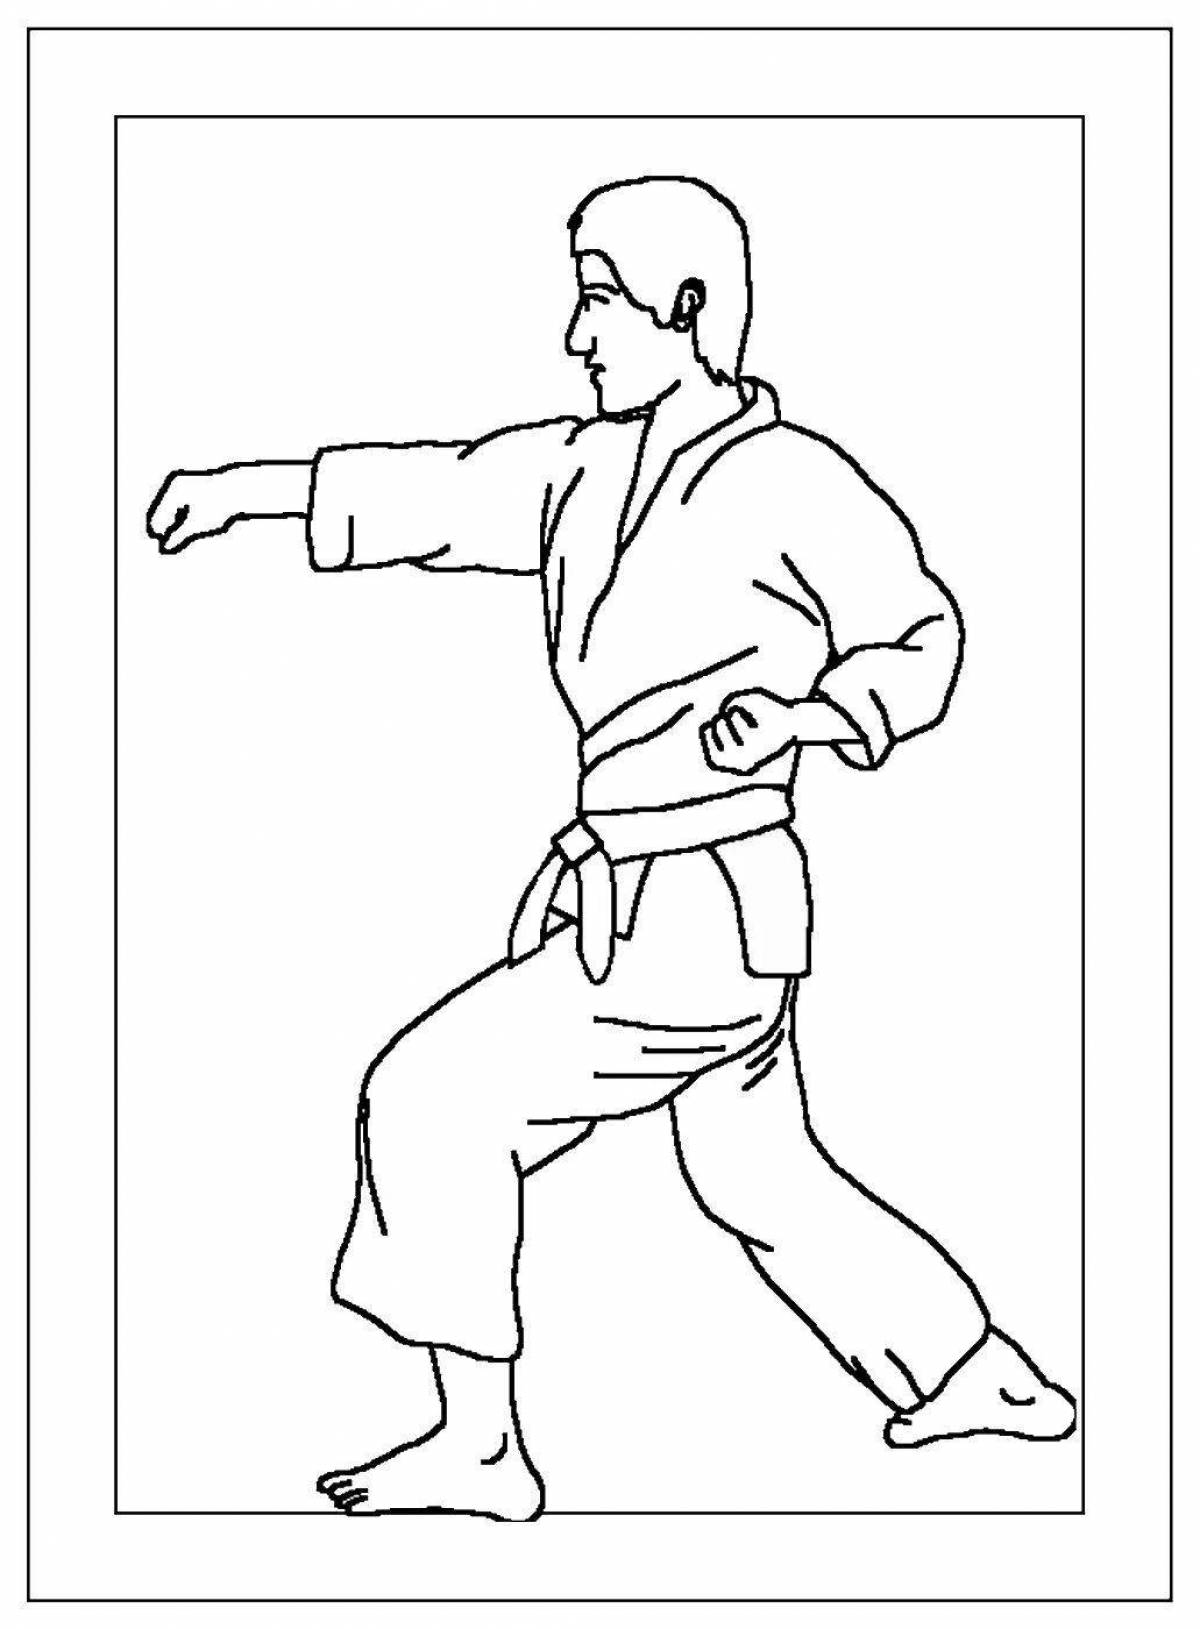 Involving judoka coloring book